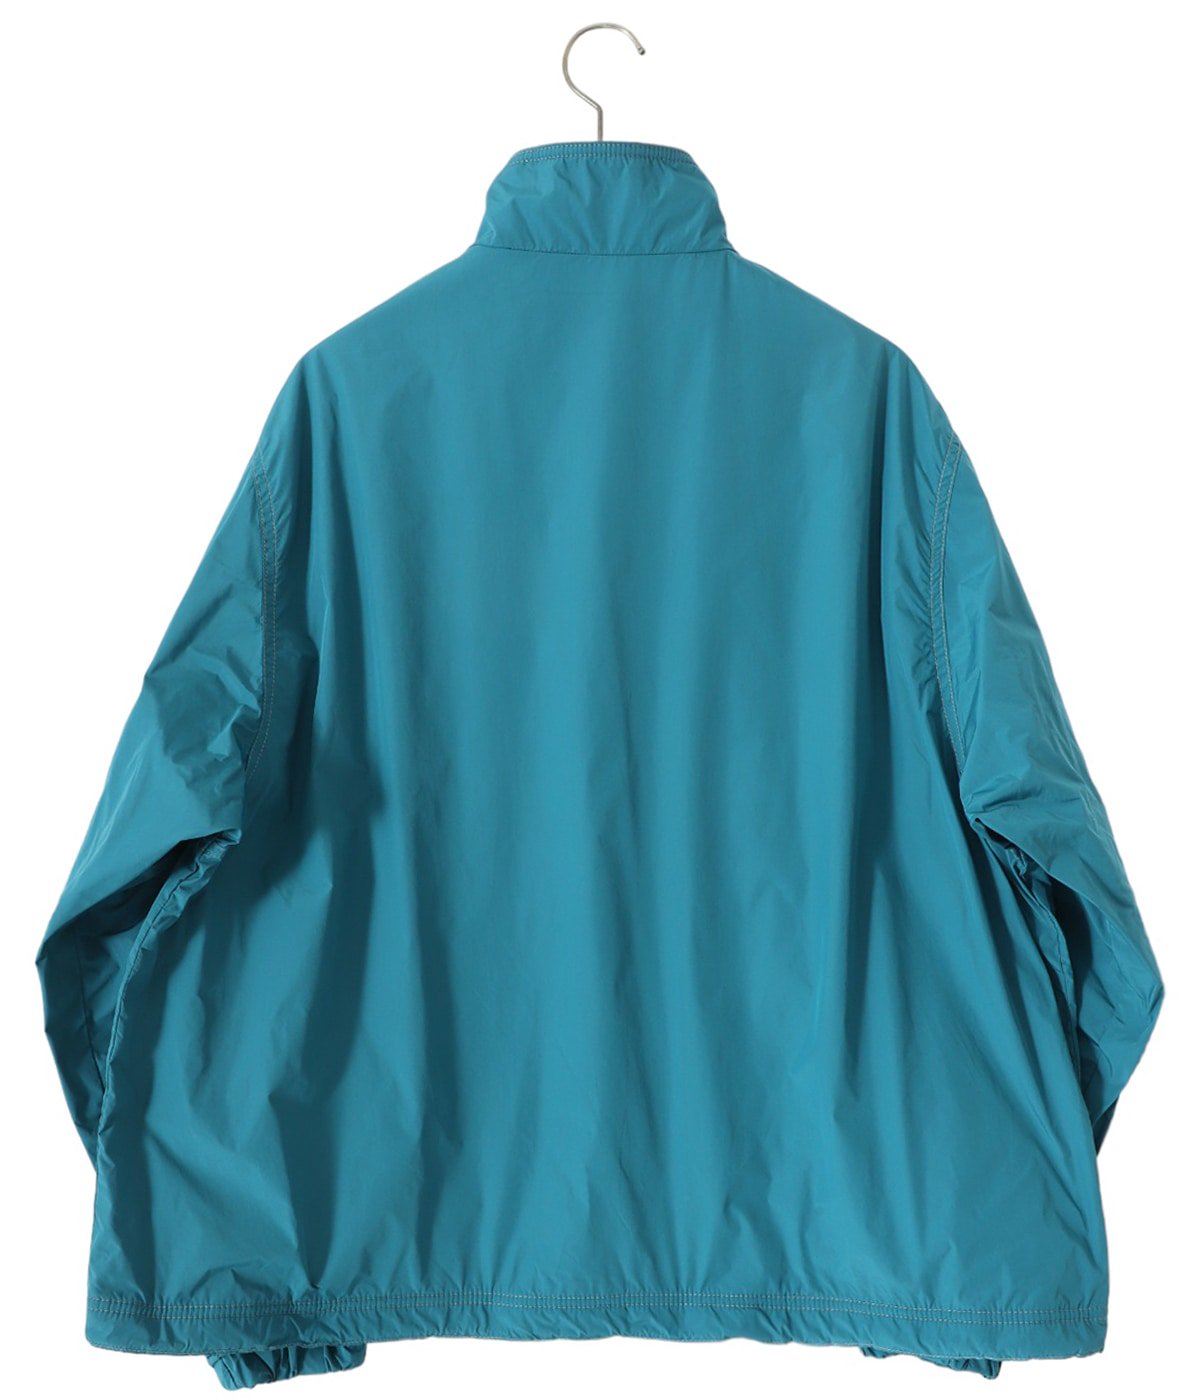 Lovell Microfleece lined Jacket